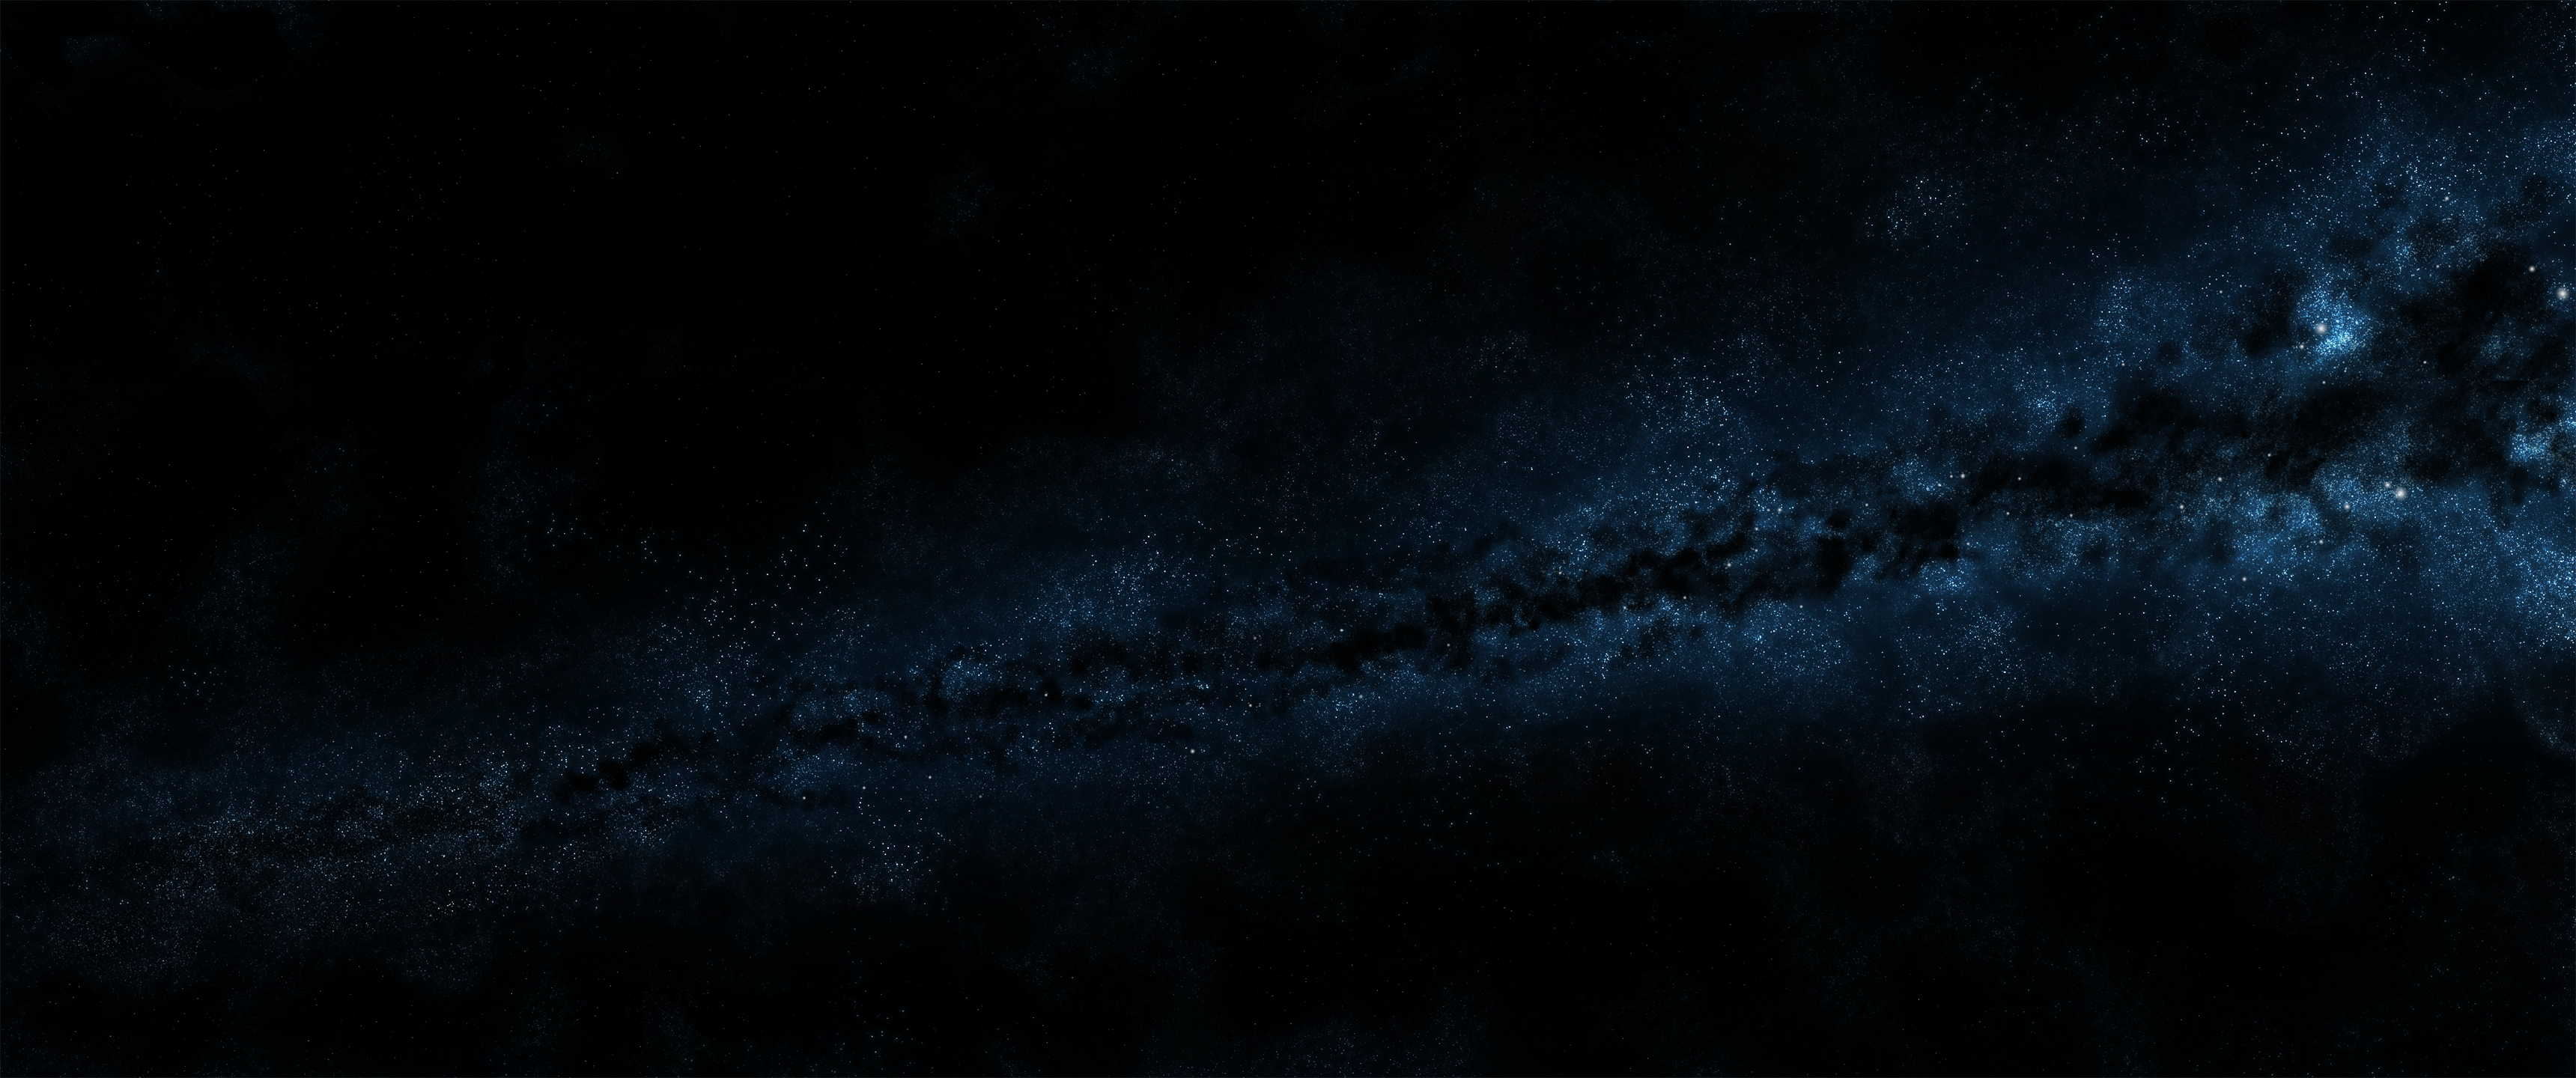 Dark Blue Galaxy Wallpapers